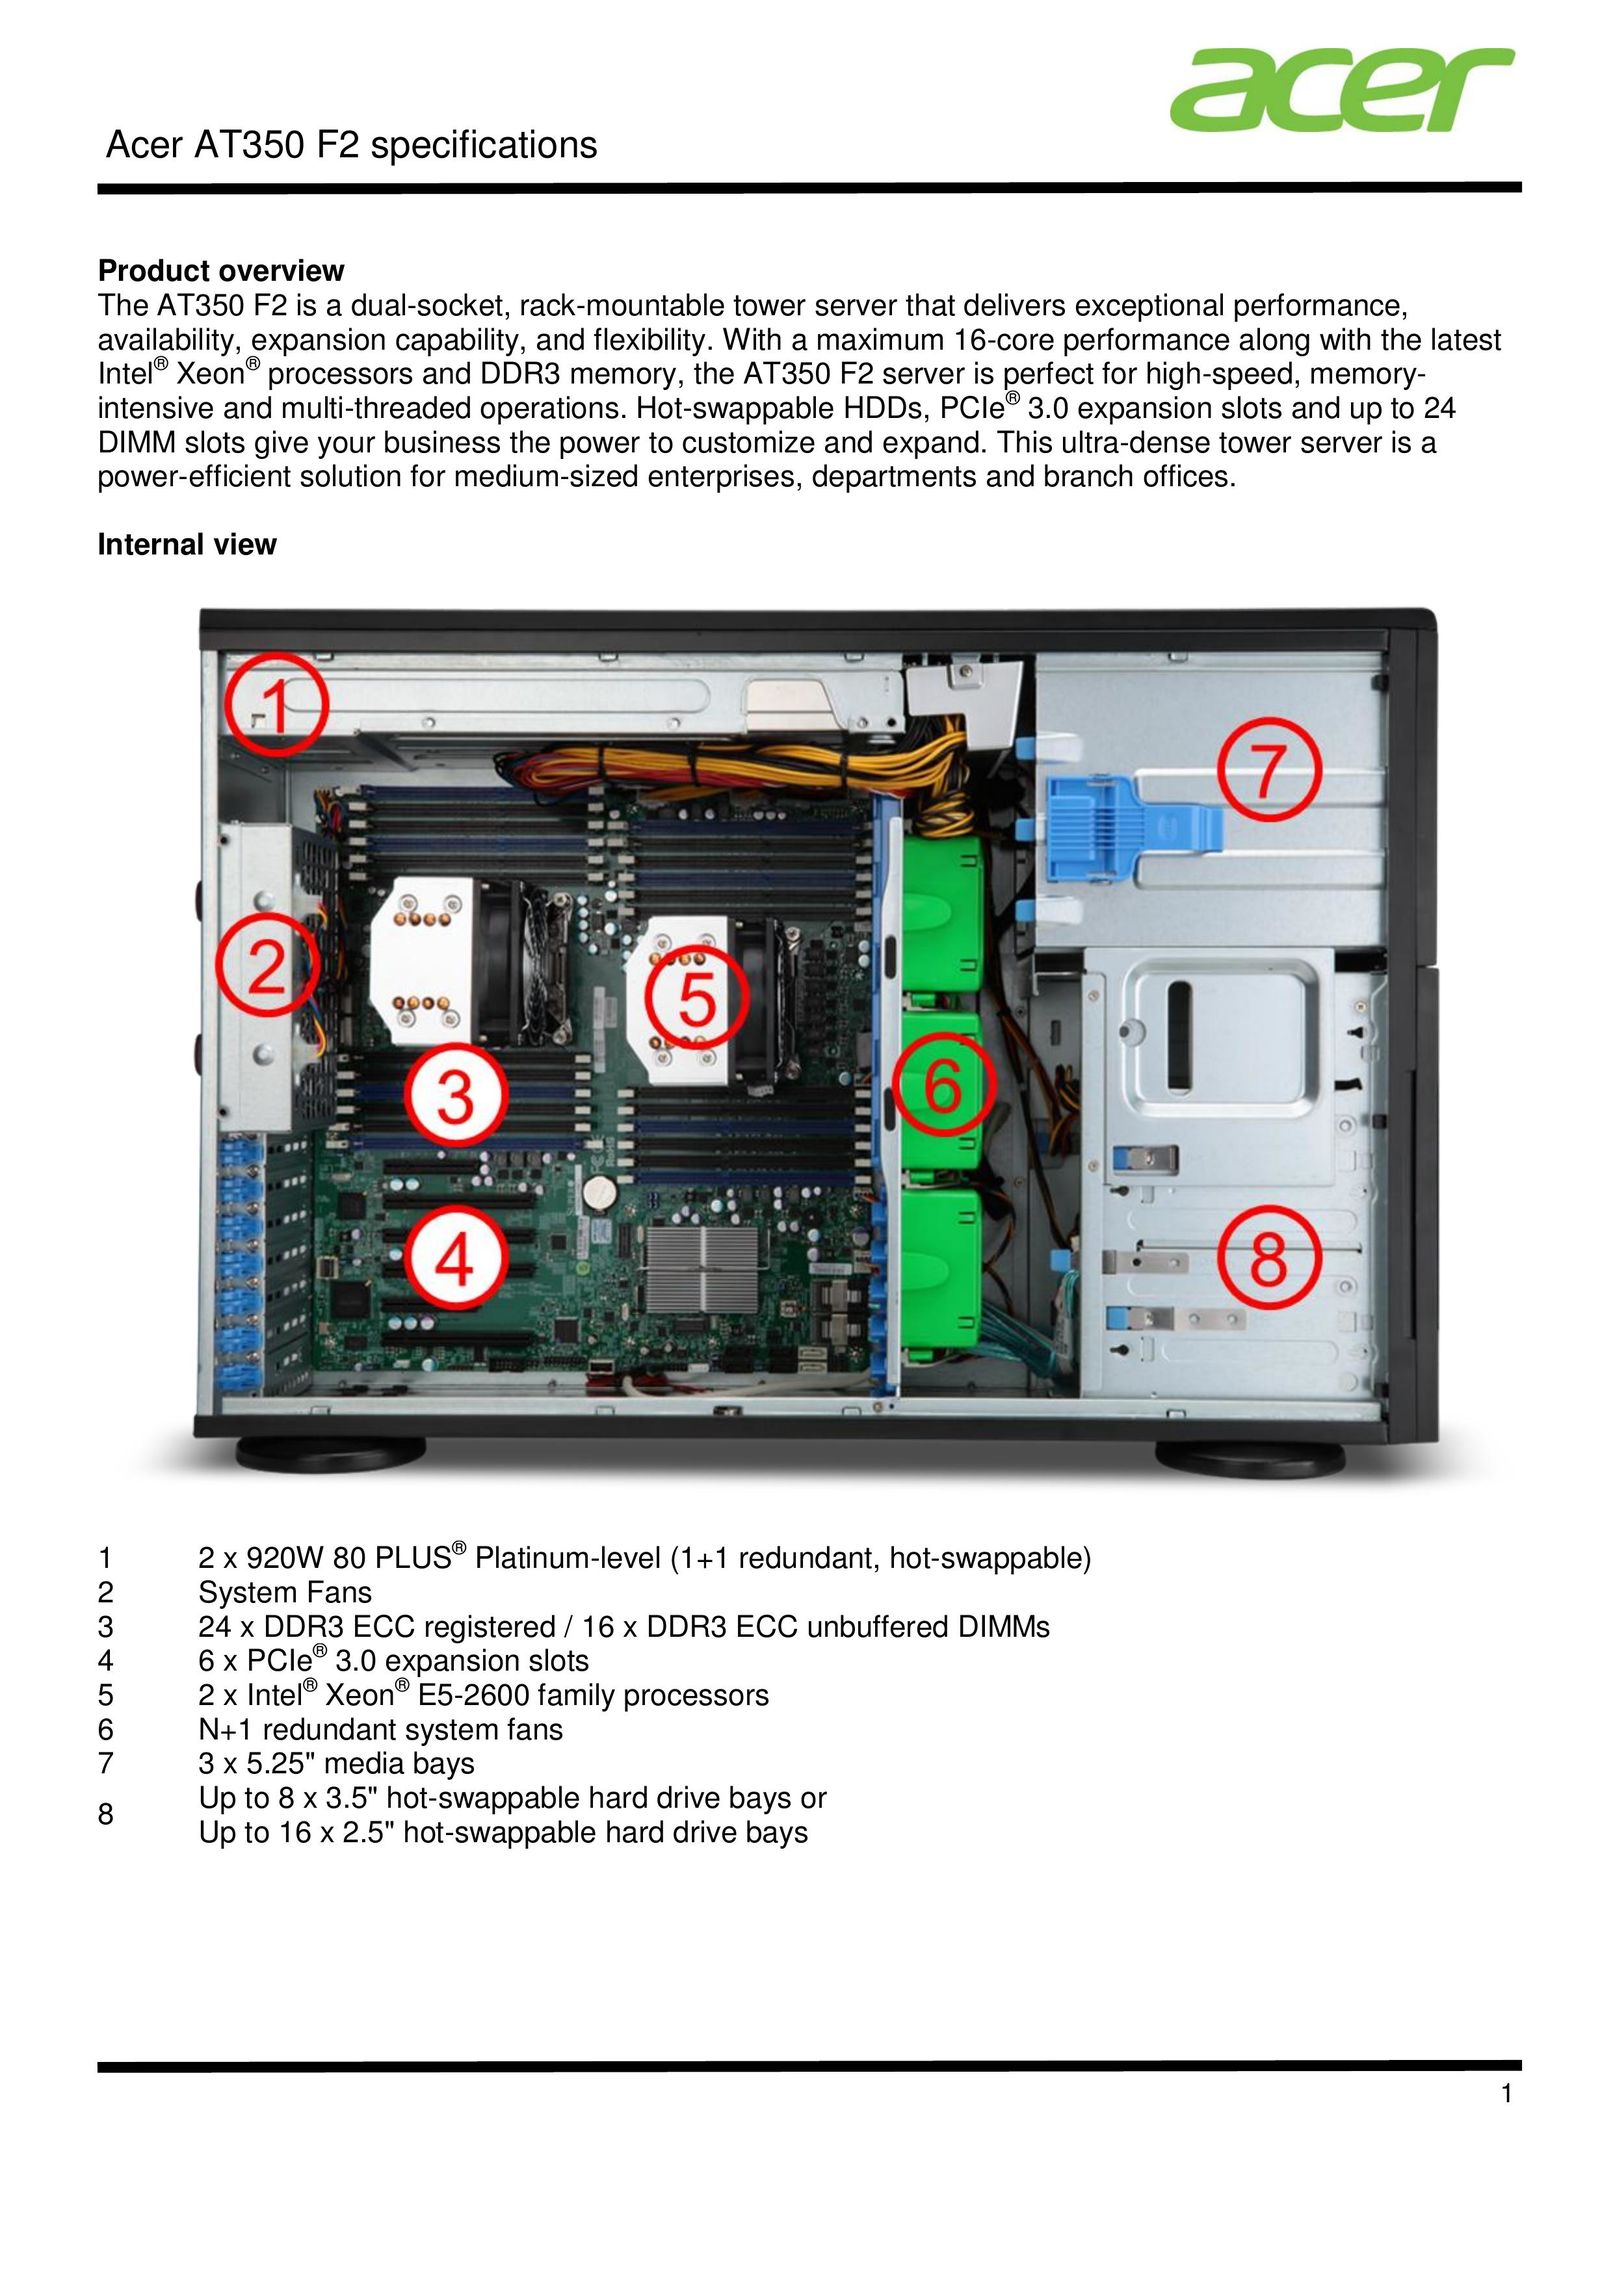 Acer AT350 F2 Server User Manual